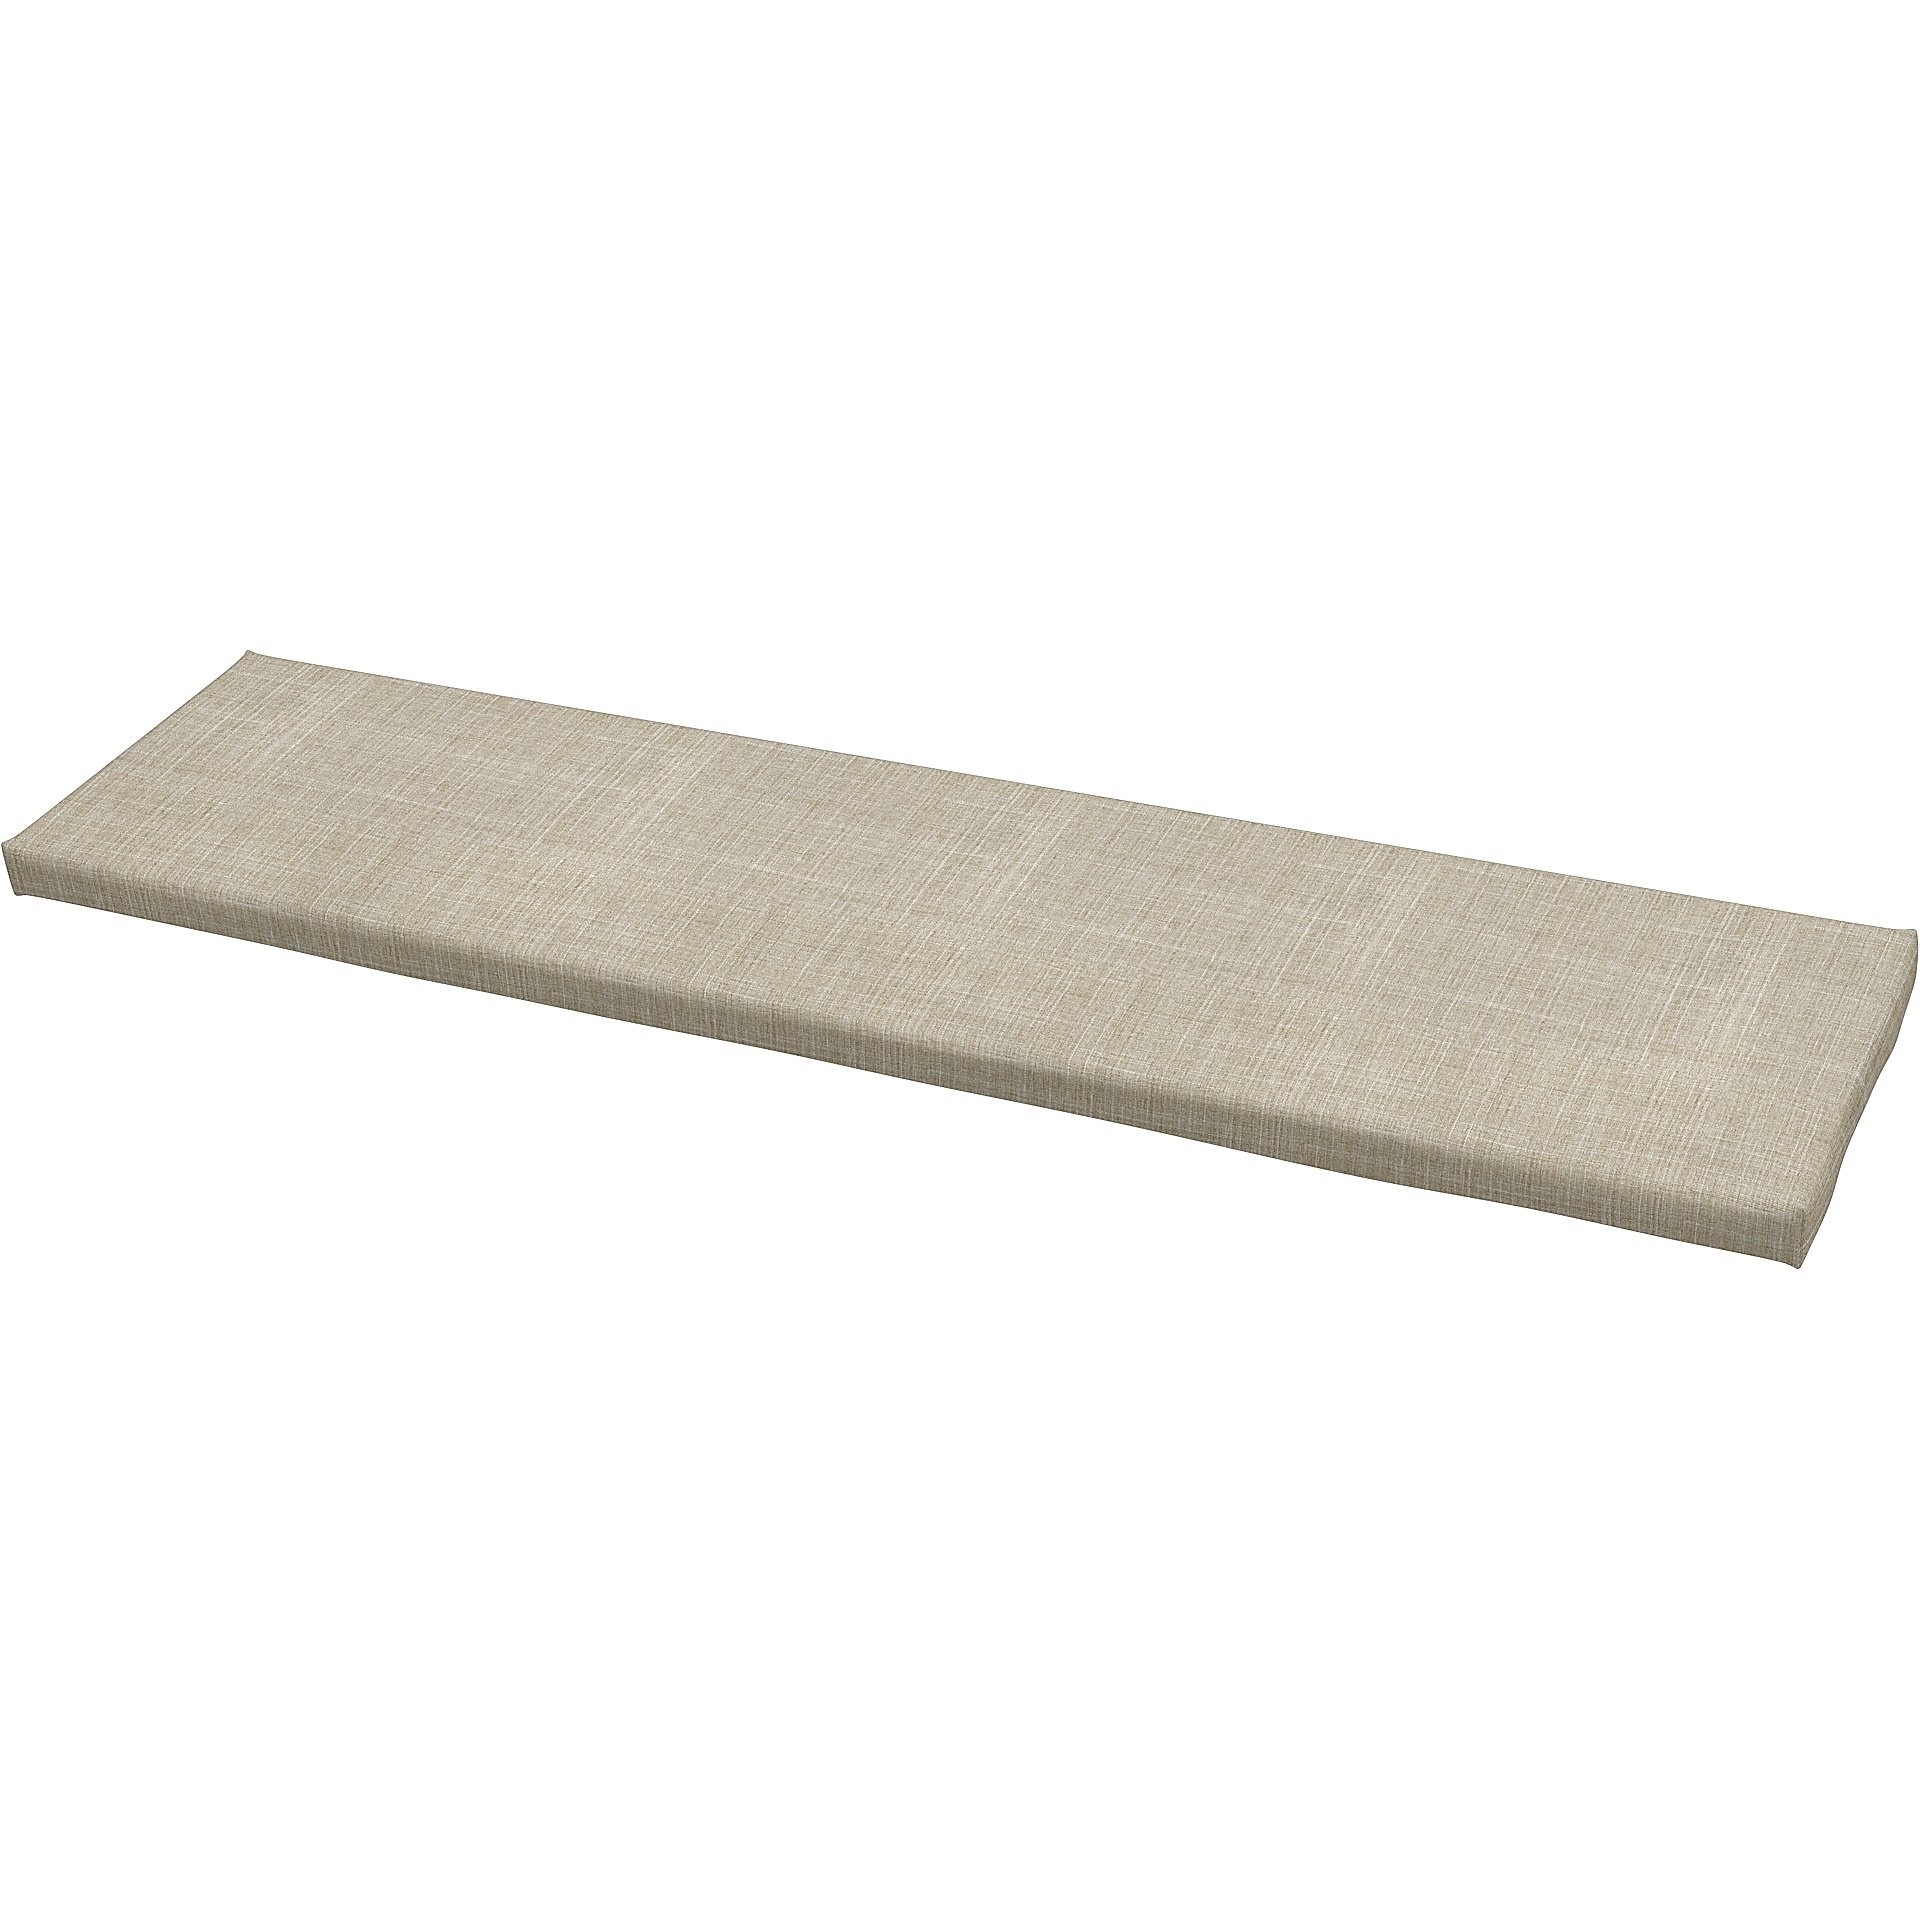 IKEA - Universal bench cushion cover 140x35x3,5 cm, Sand Beige, Boucle & Texture - Bemz